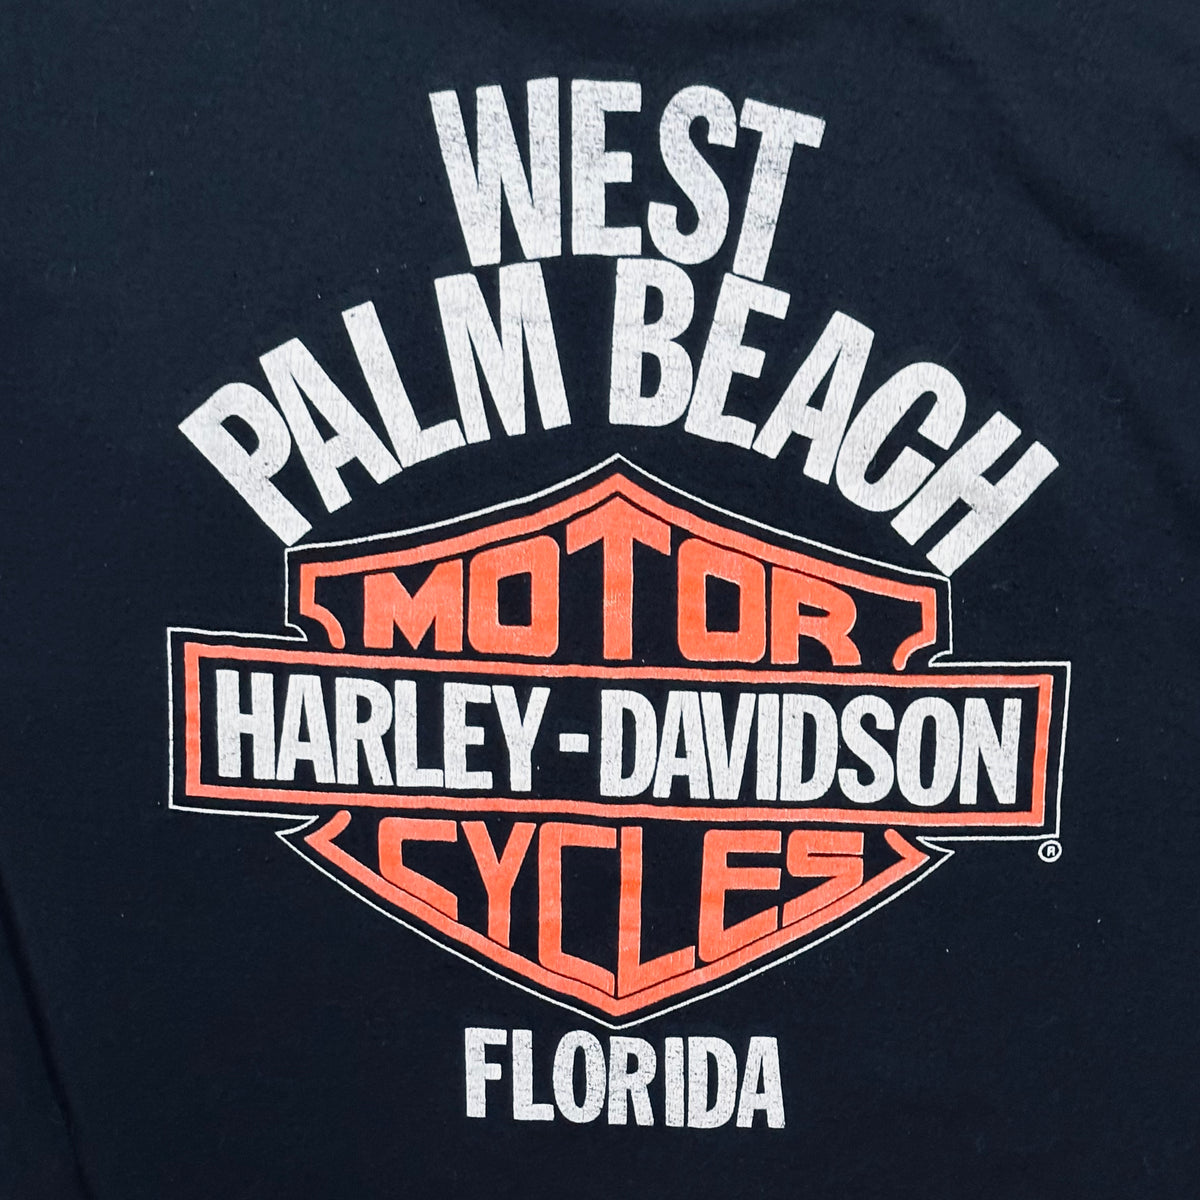 1970s Vintage Harley Davidson West Palm Beach Motorcycle Shirt